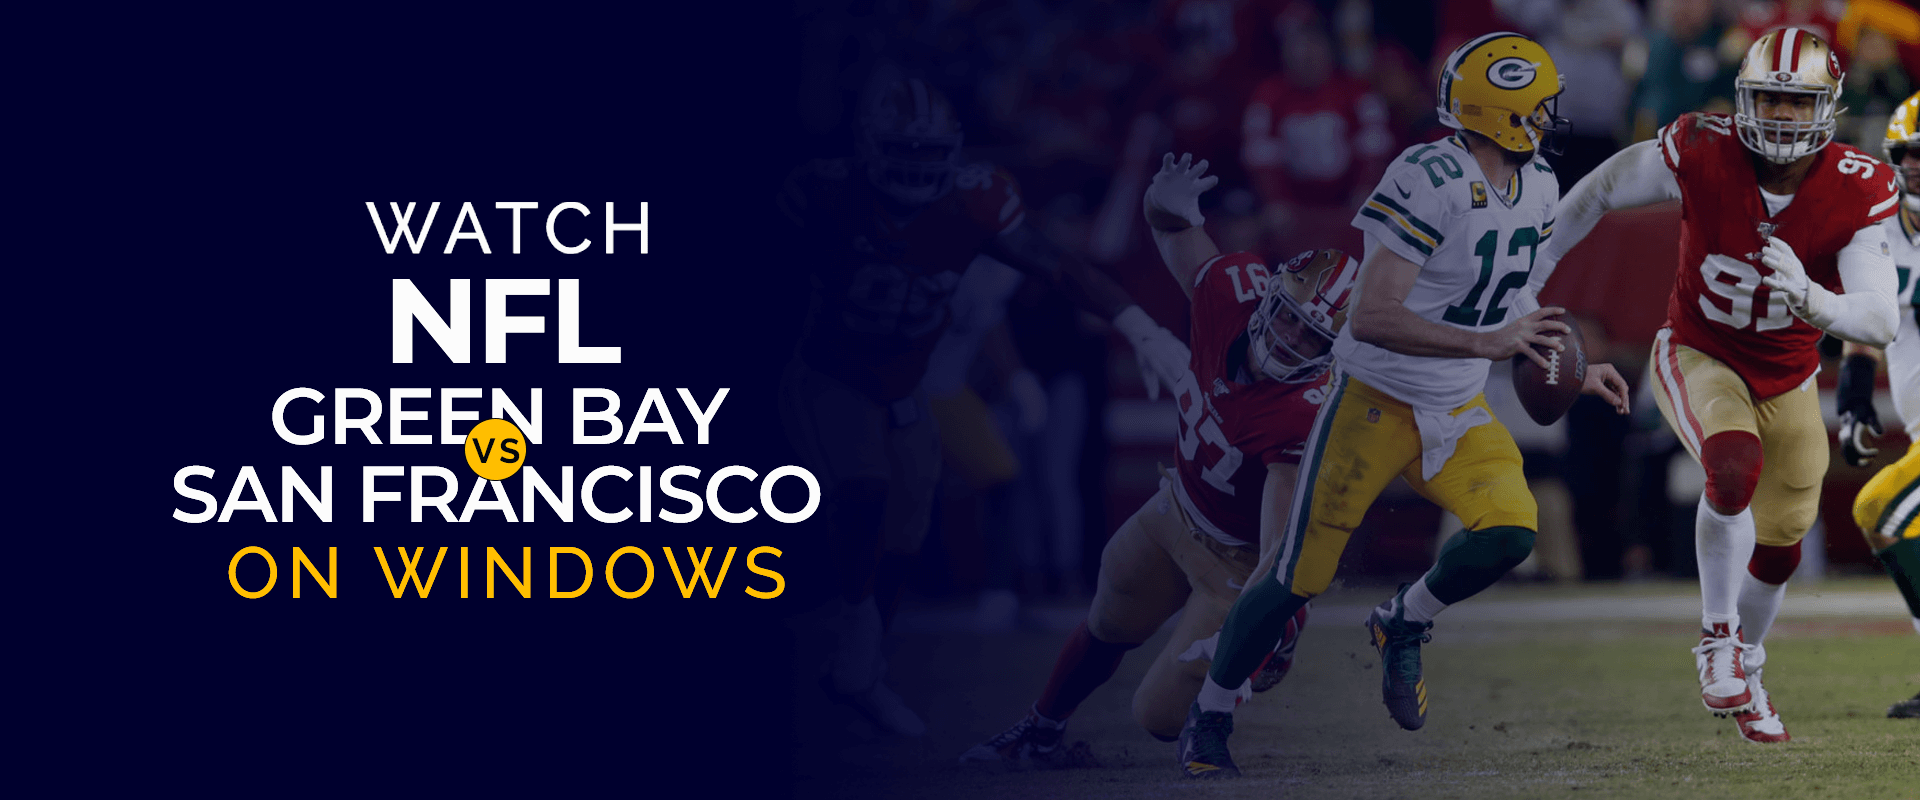 Watch NFL Green Bay Vs San Francisco on Windows